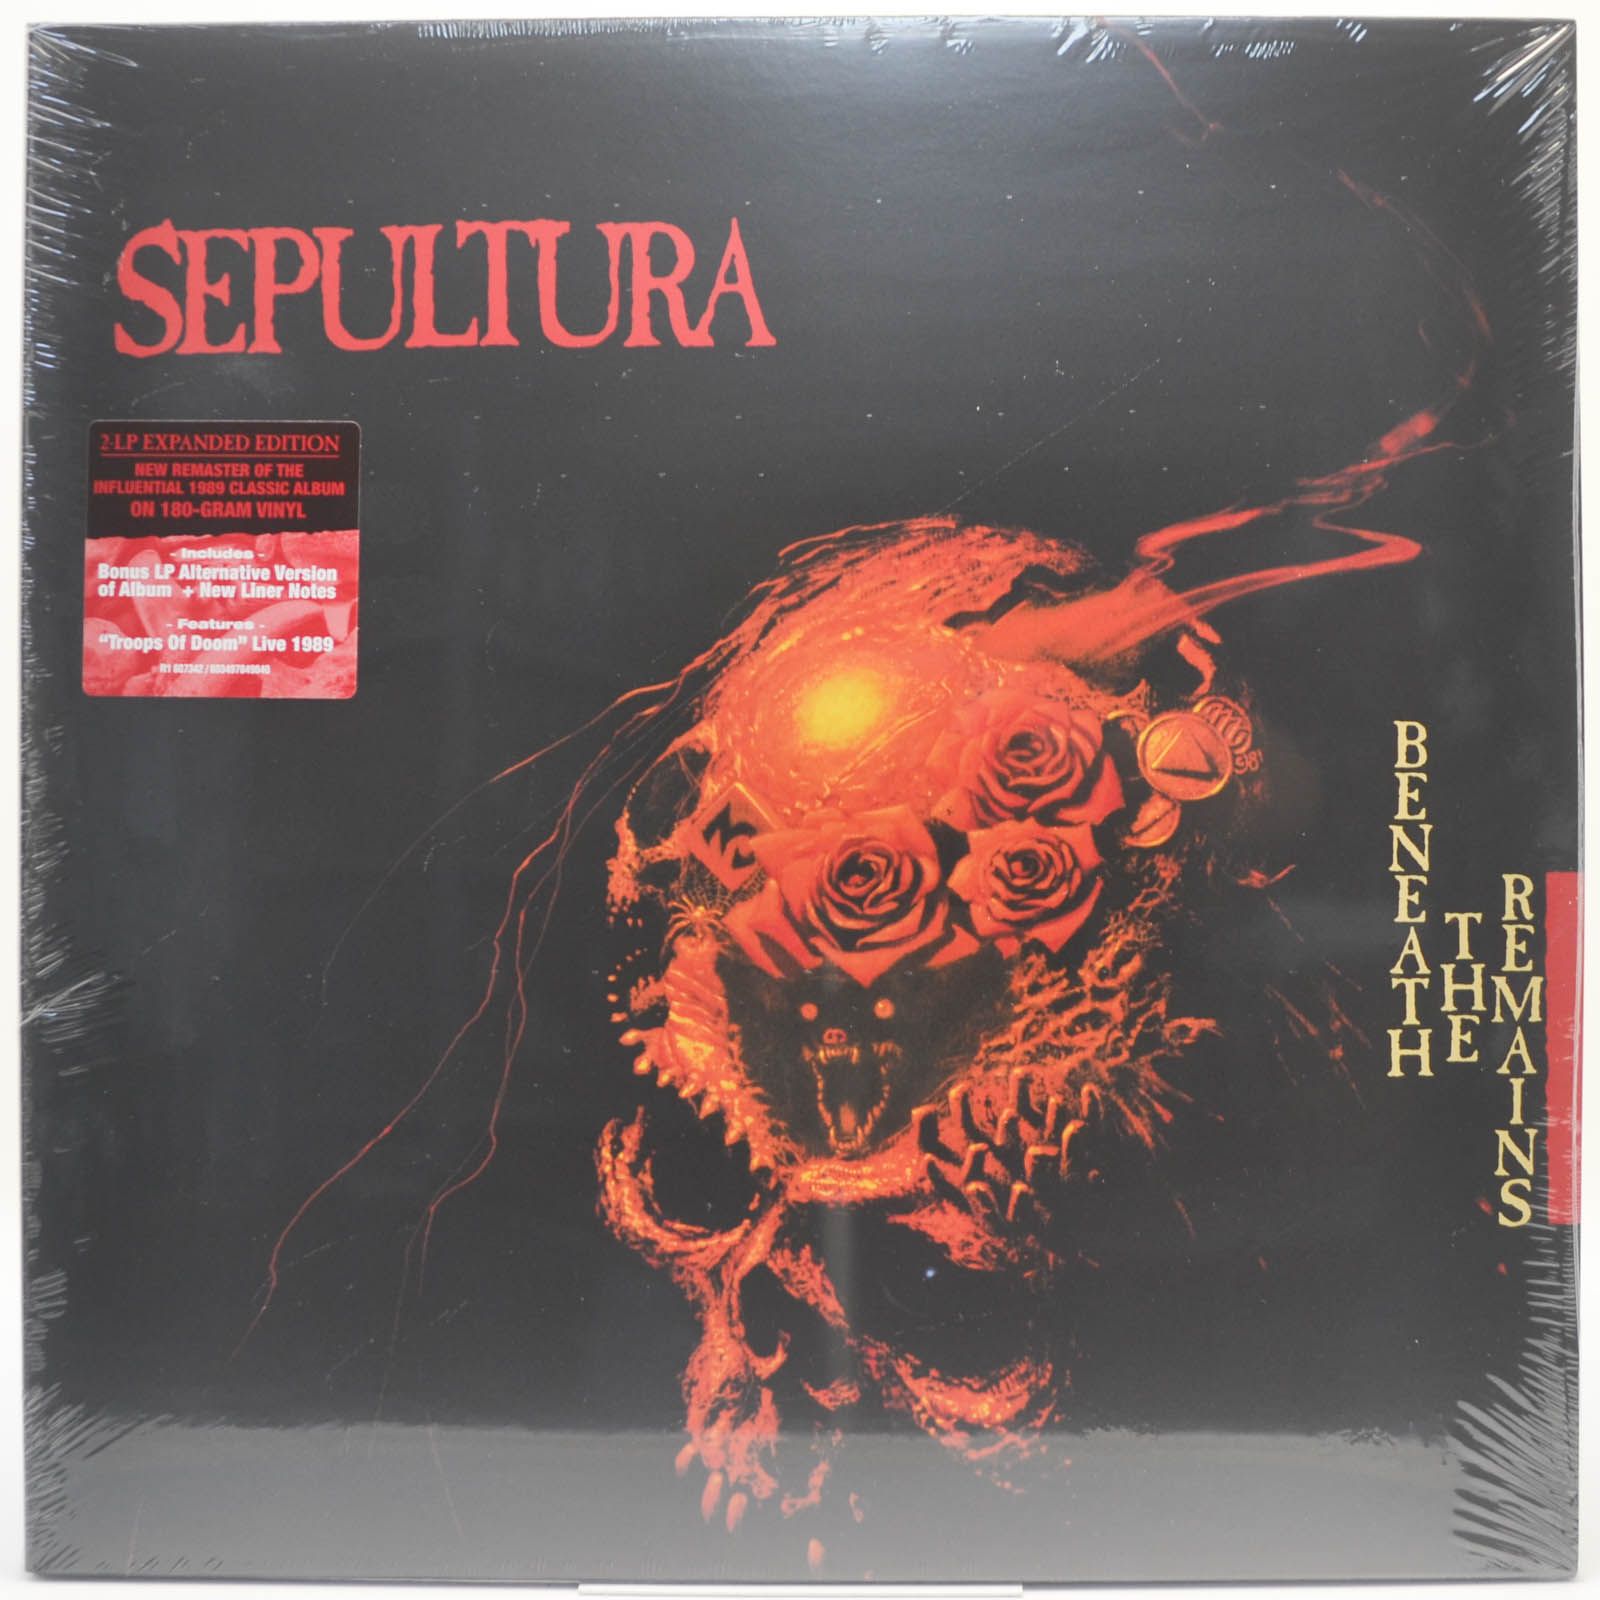 Sepultura — Beneath The Remains (2LP), 1989